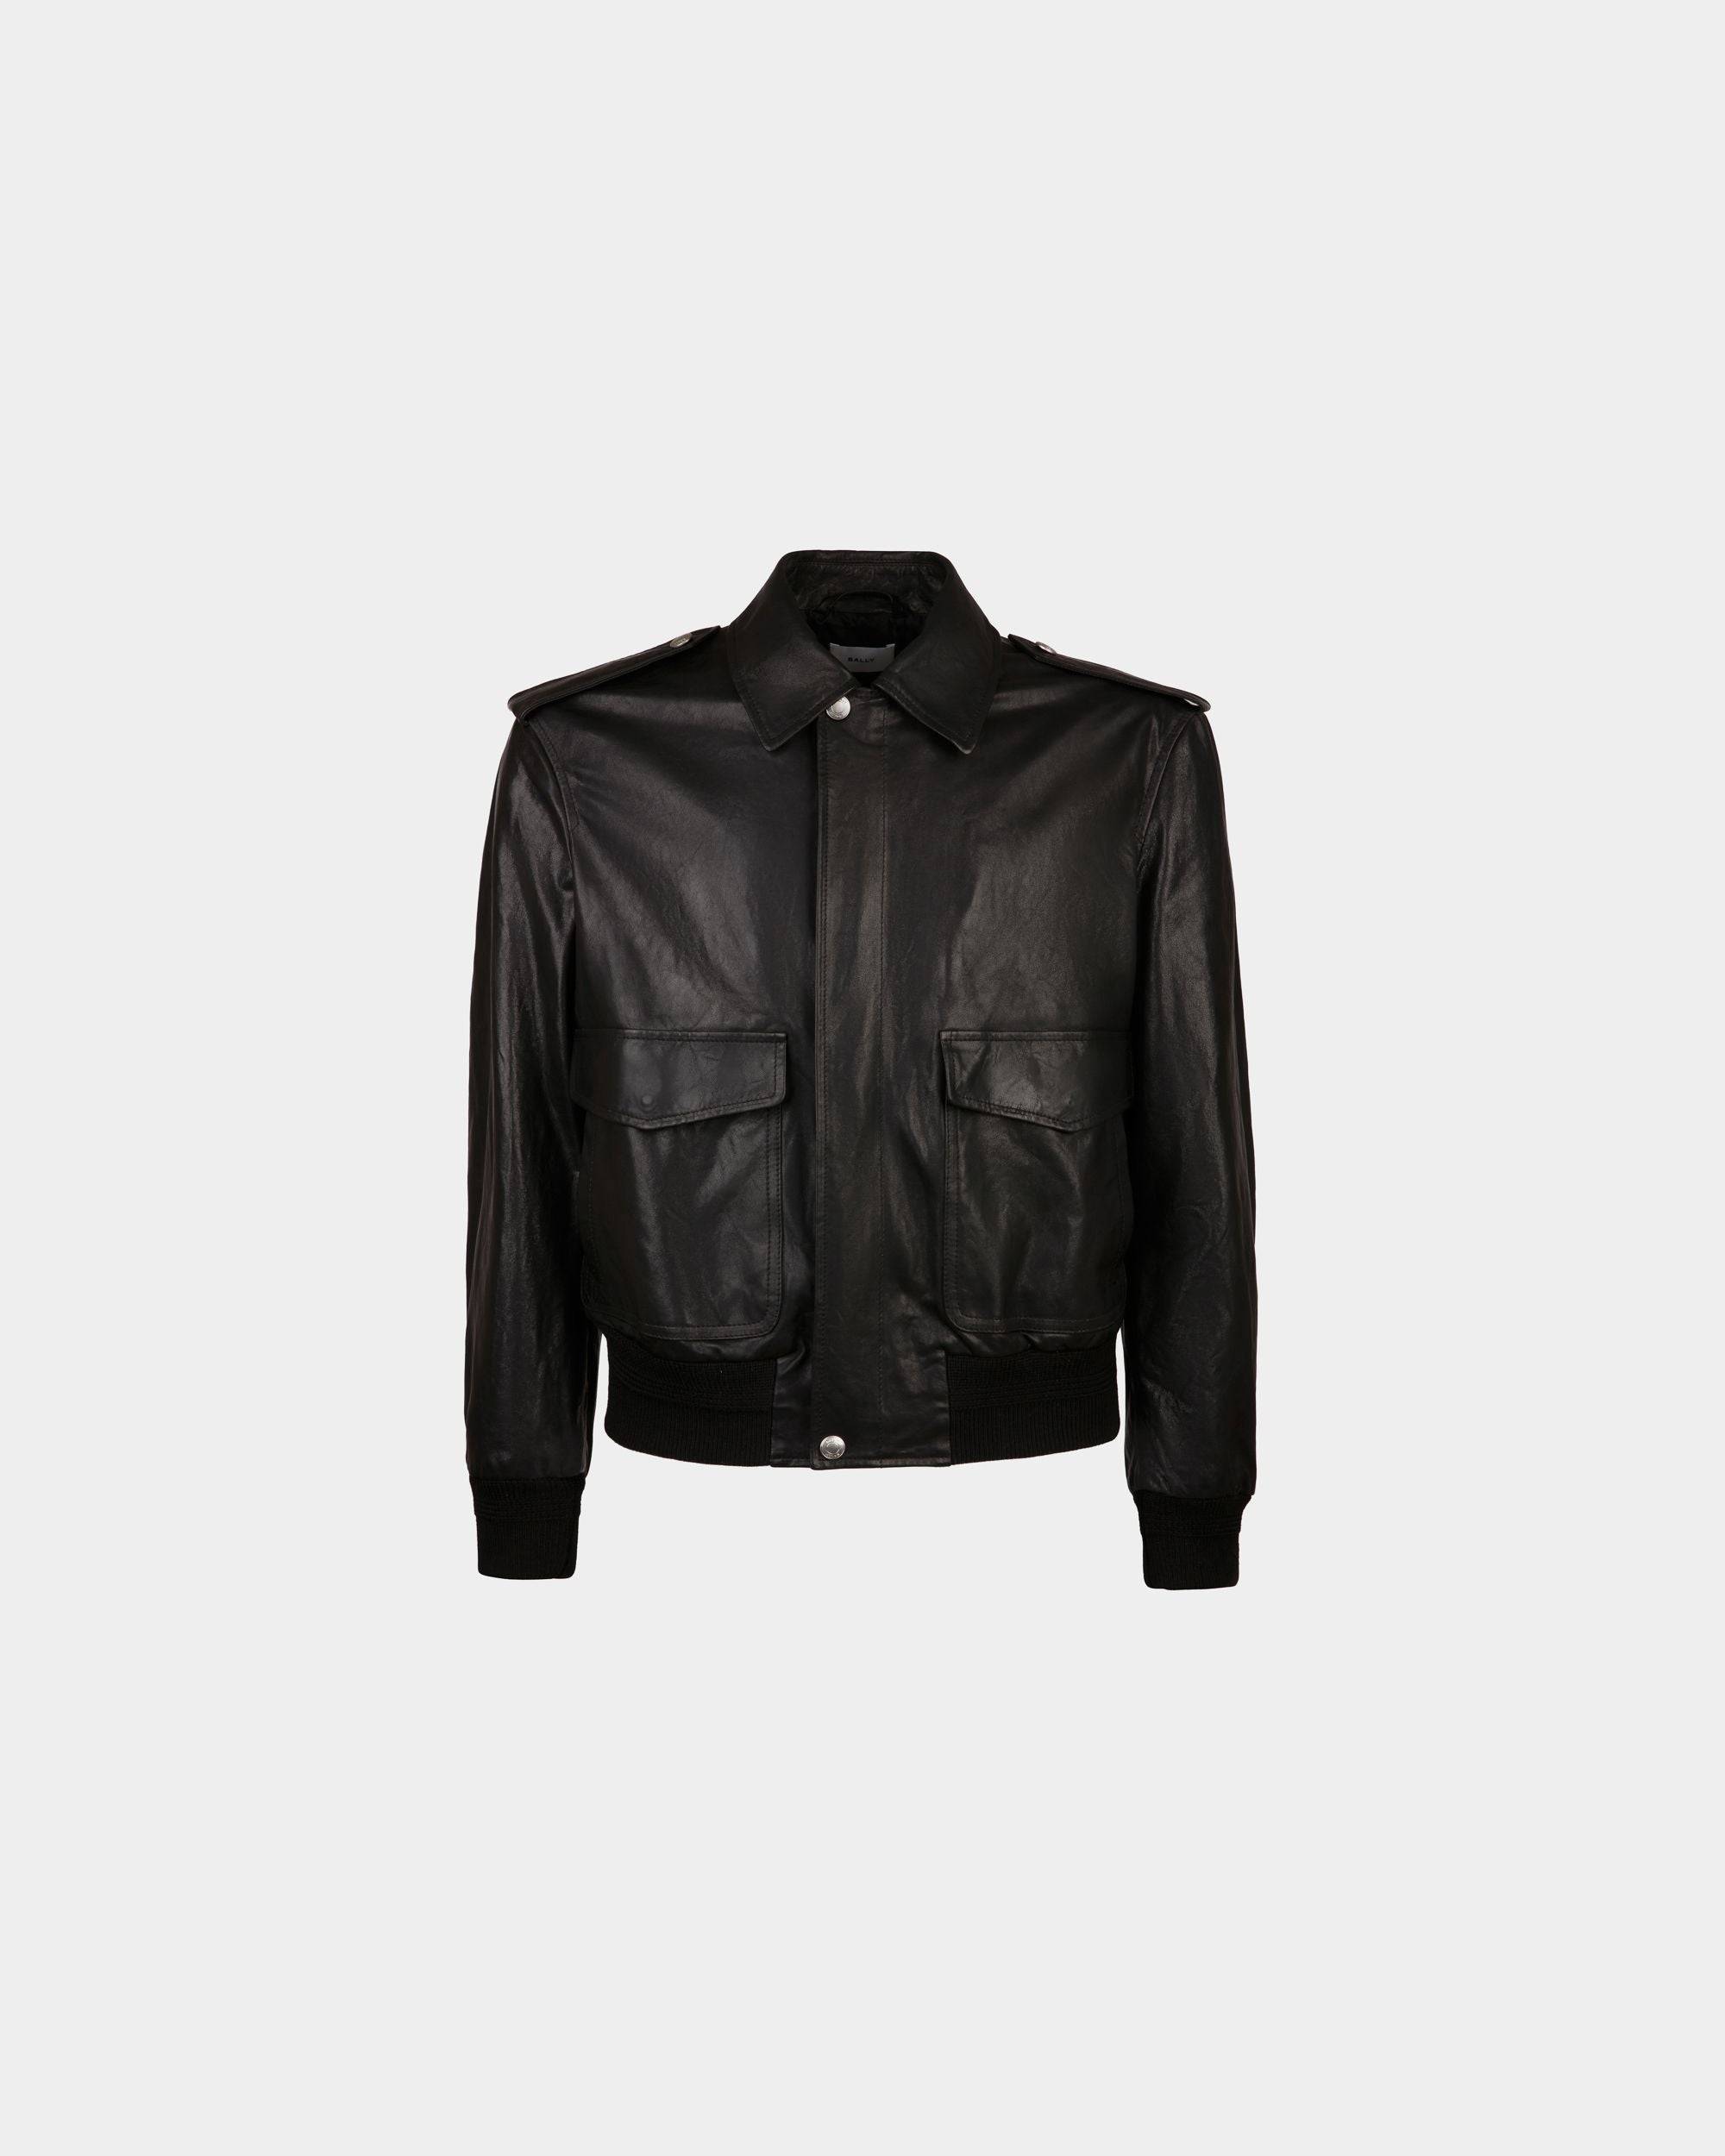 Men's Blouson In Black Leather | Bally | Still Life Front